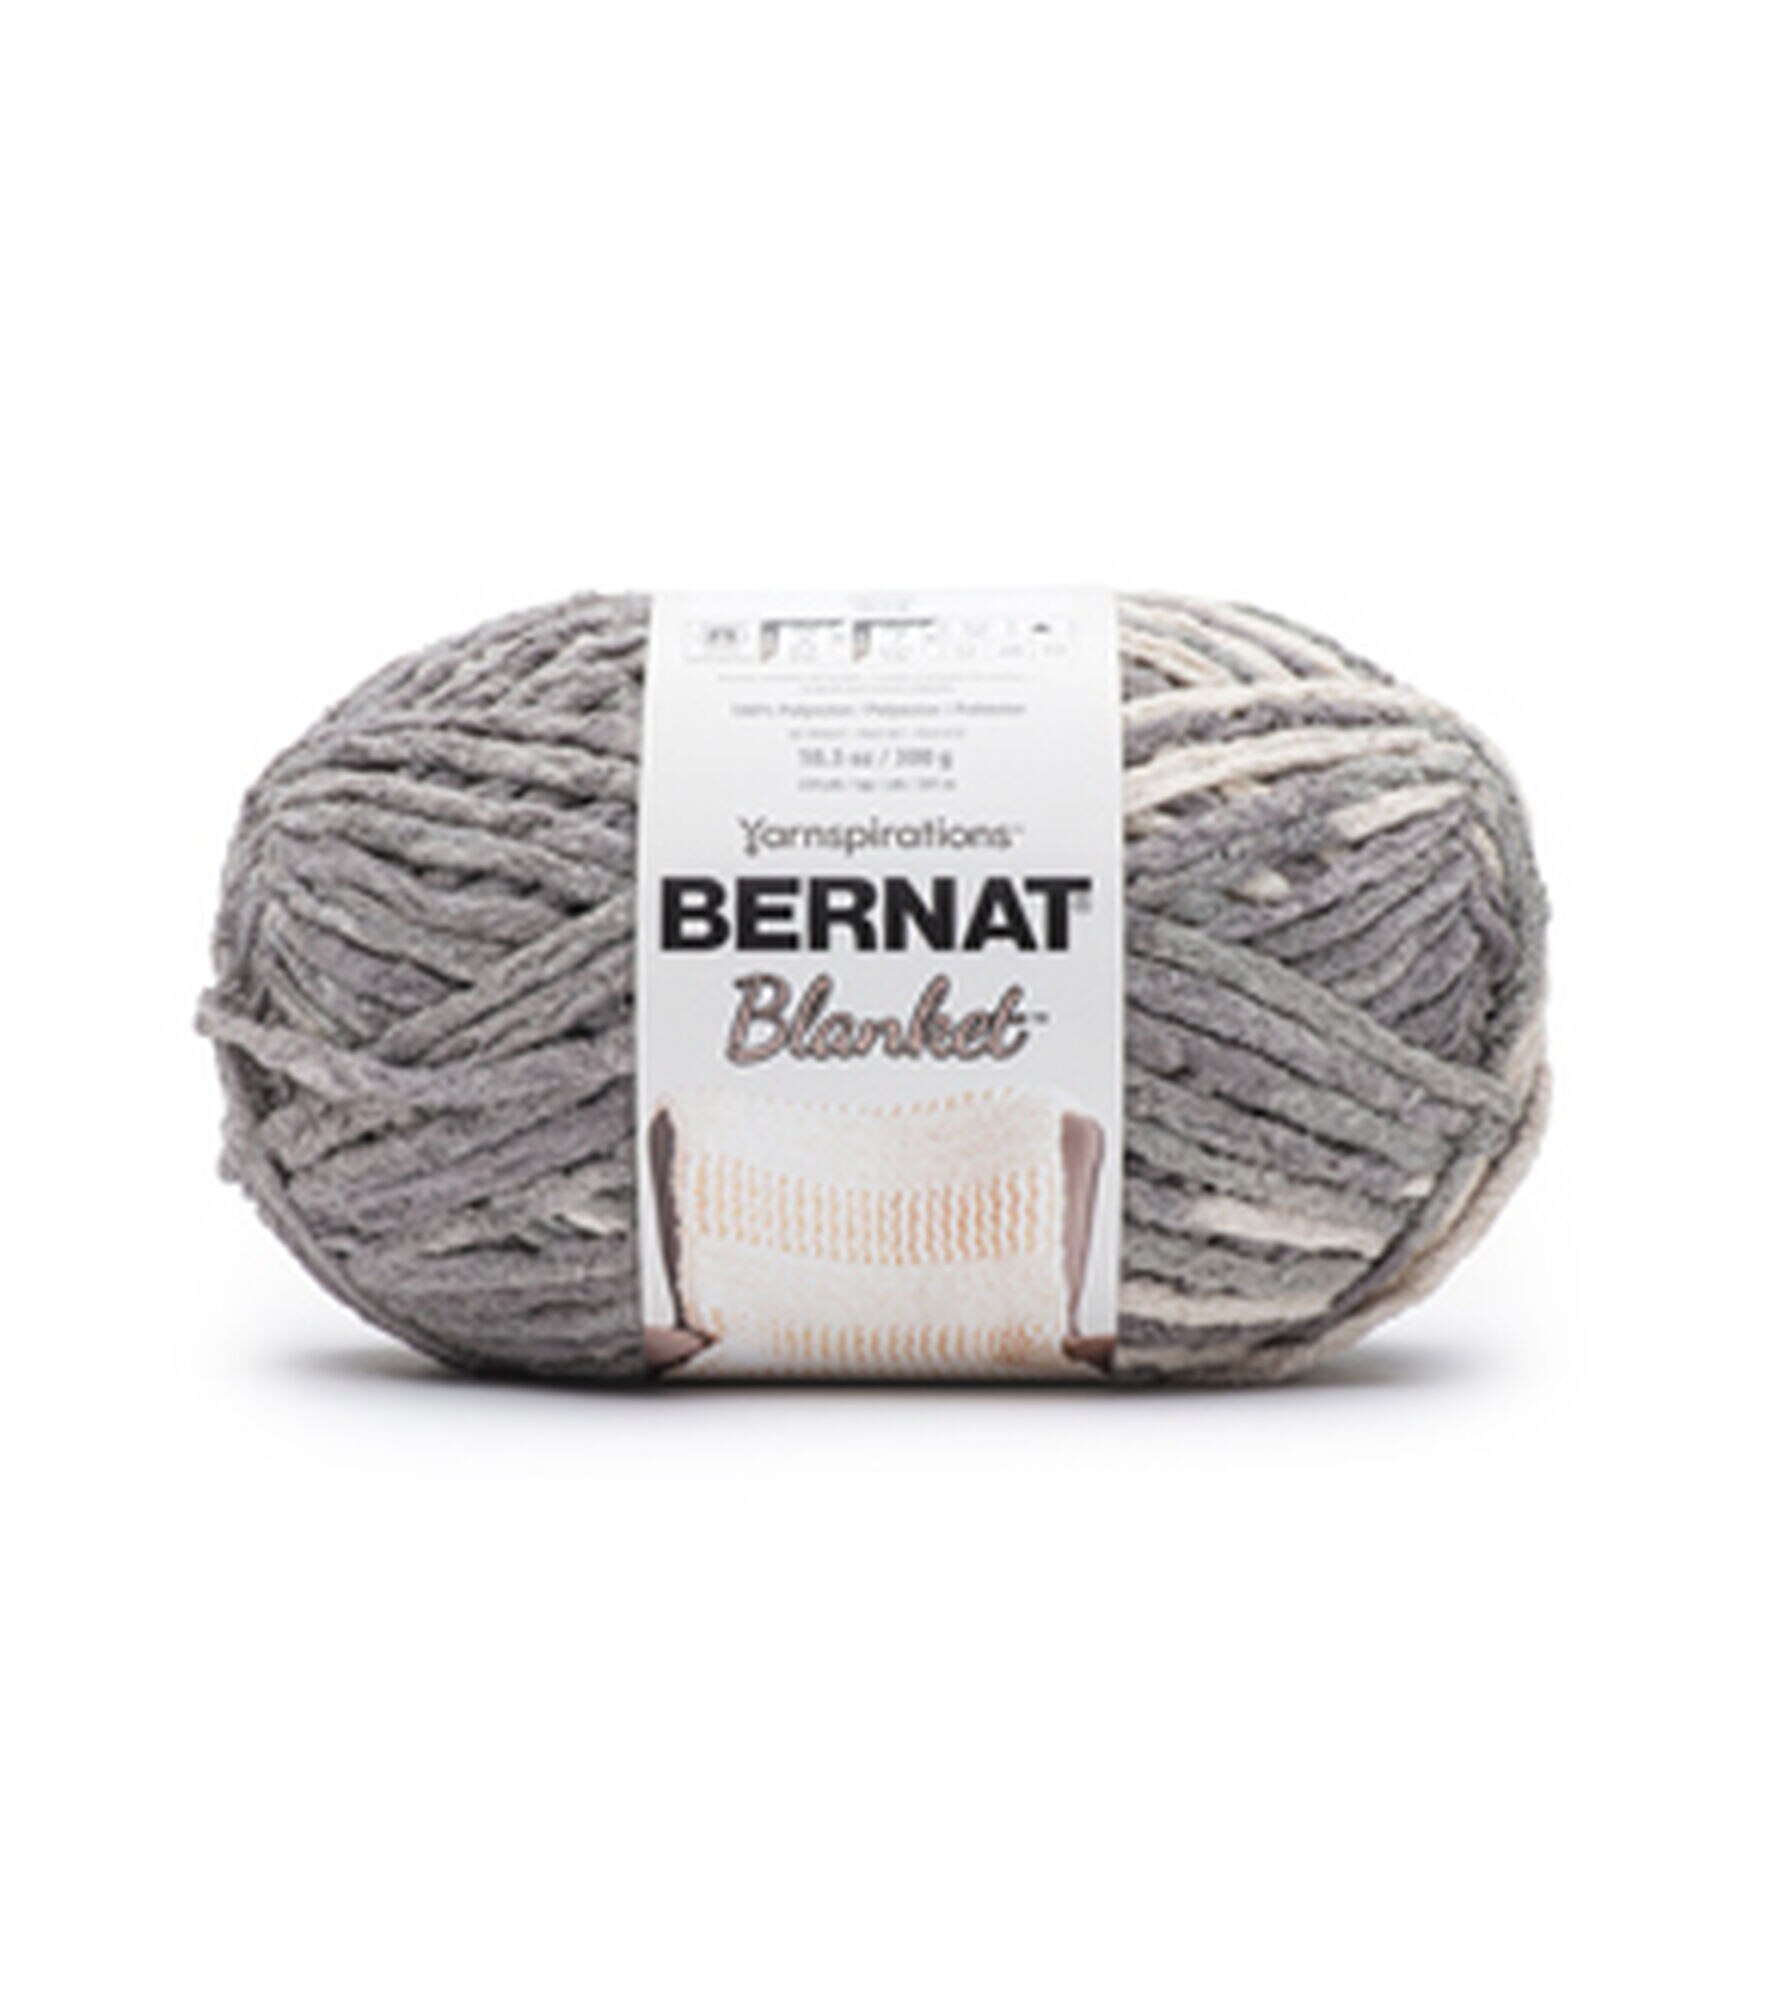 Bernat Blanket Yarn - Blanket Yarn . shop for Bernat products in India.